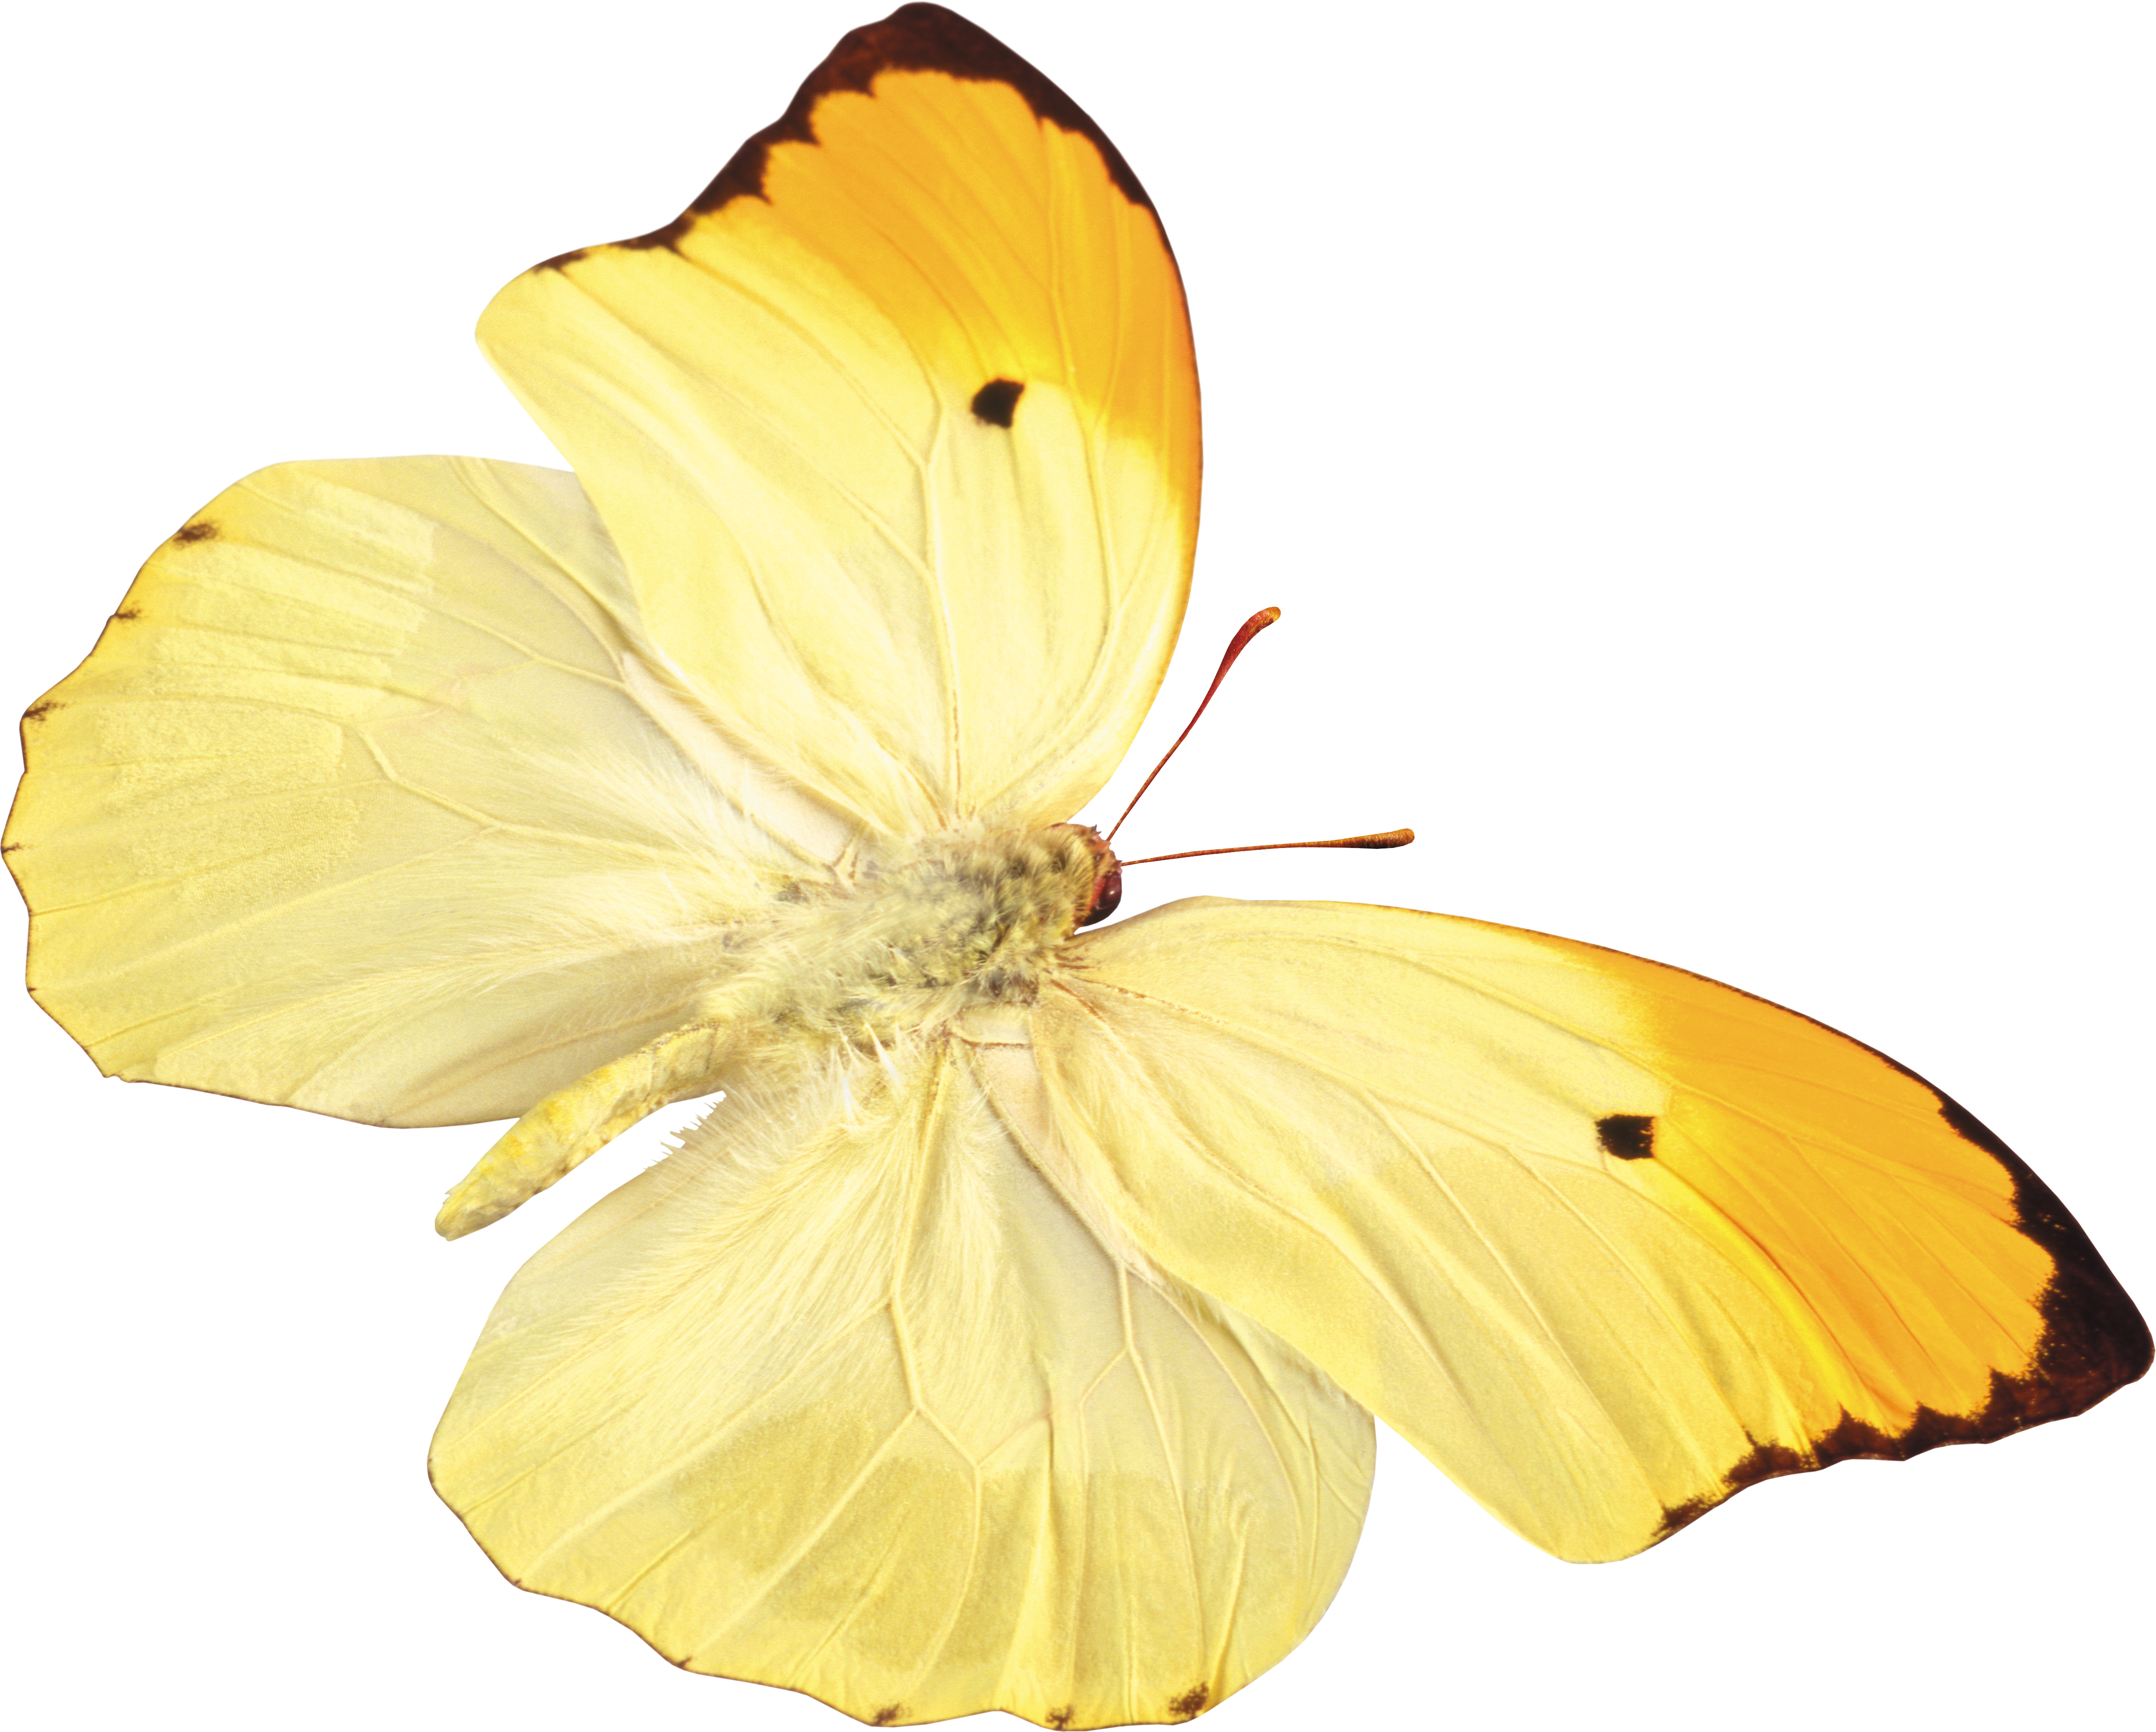 Gelber Schmetterling